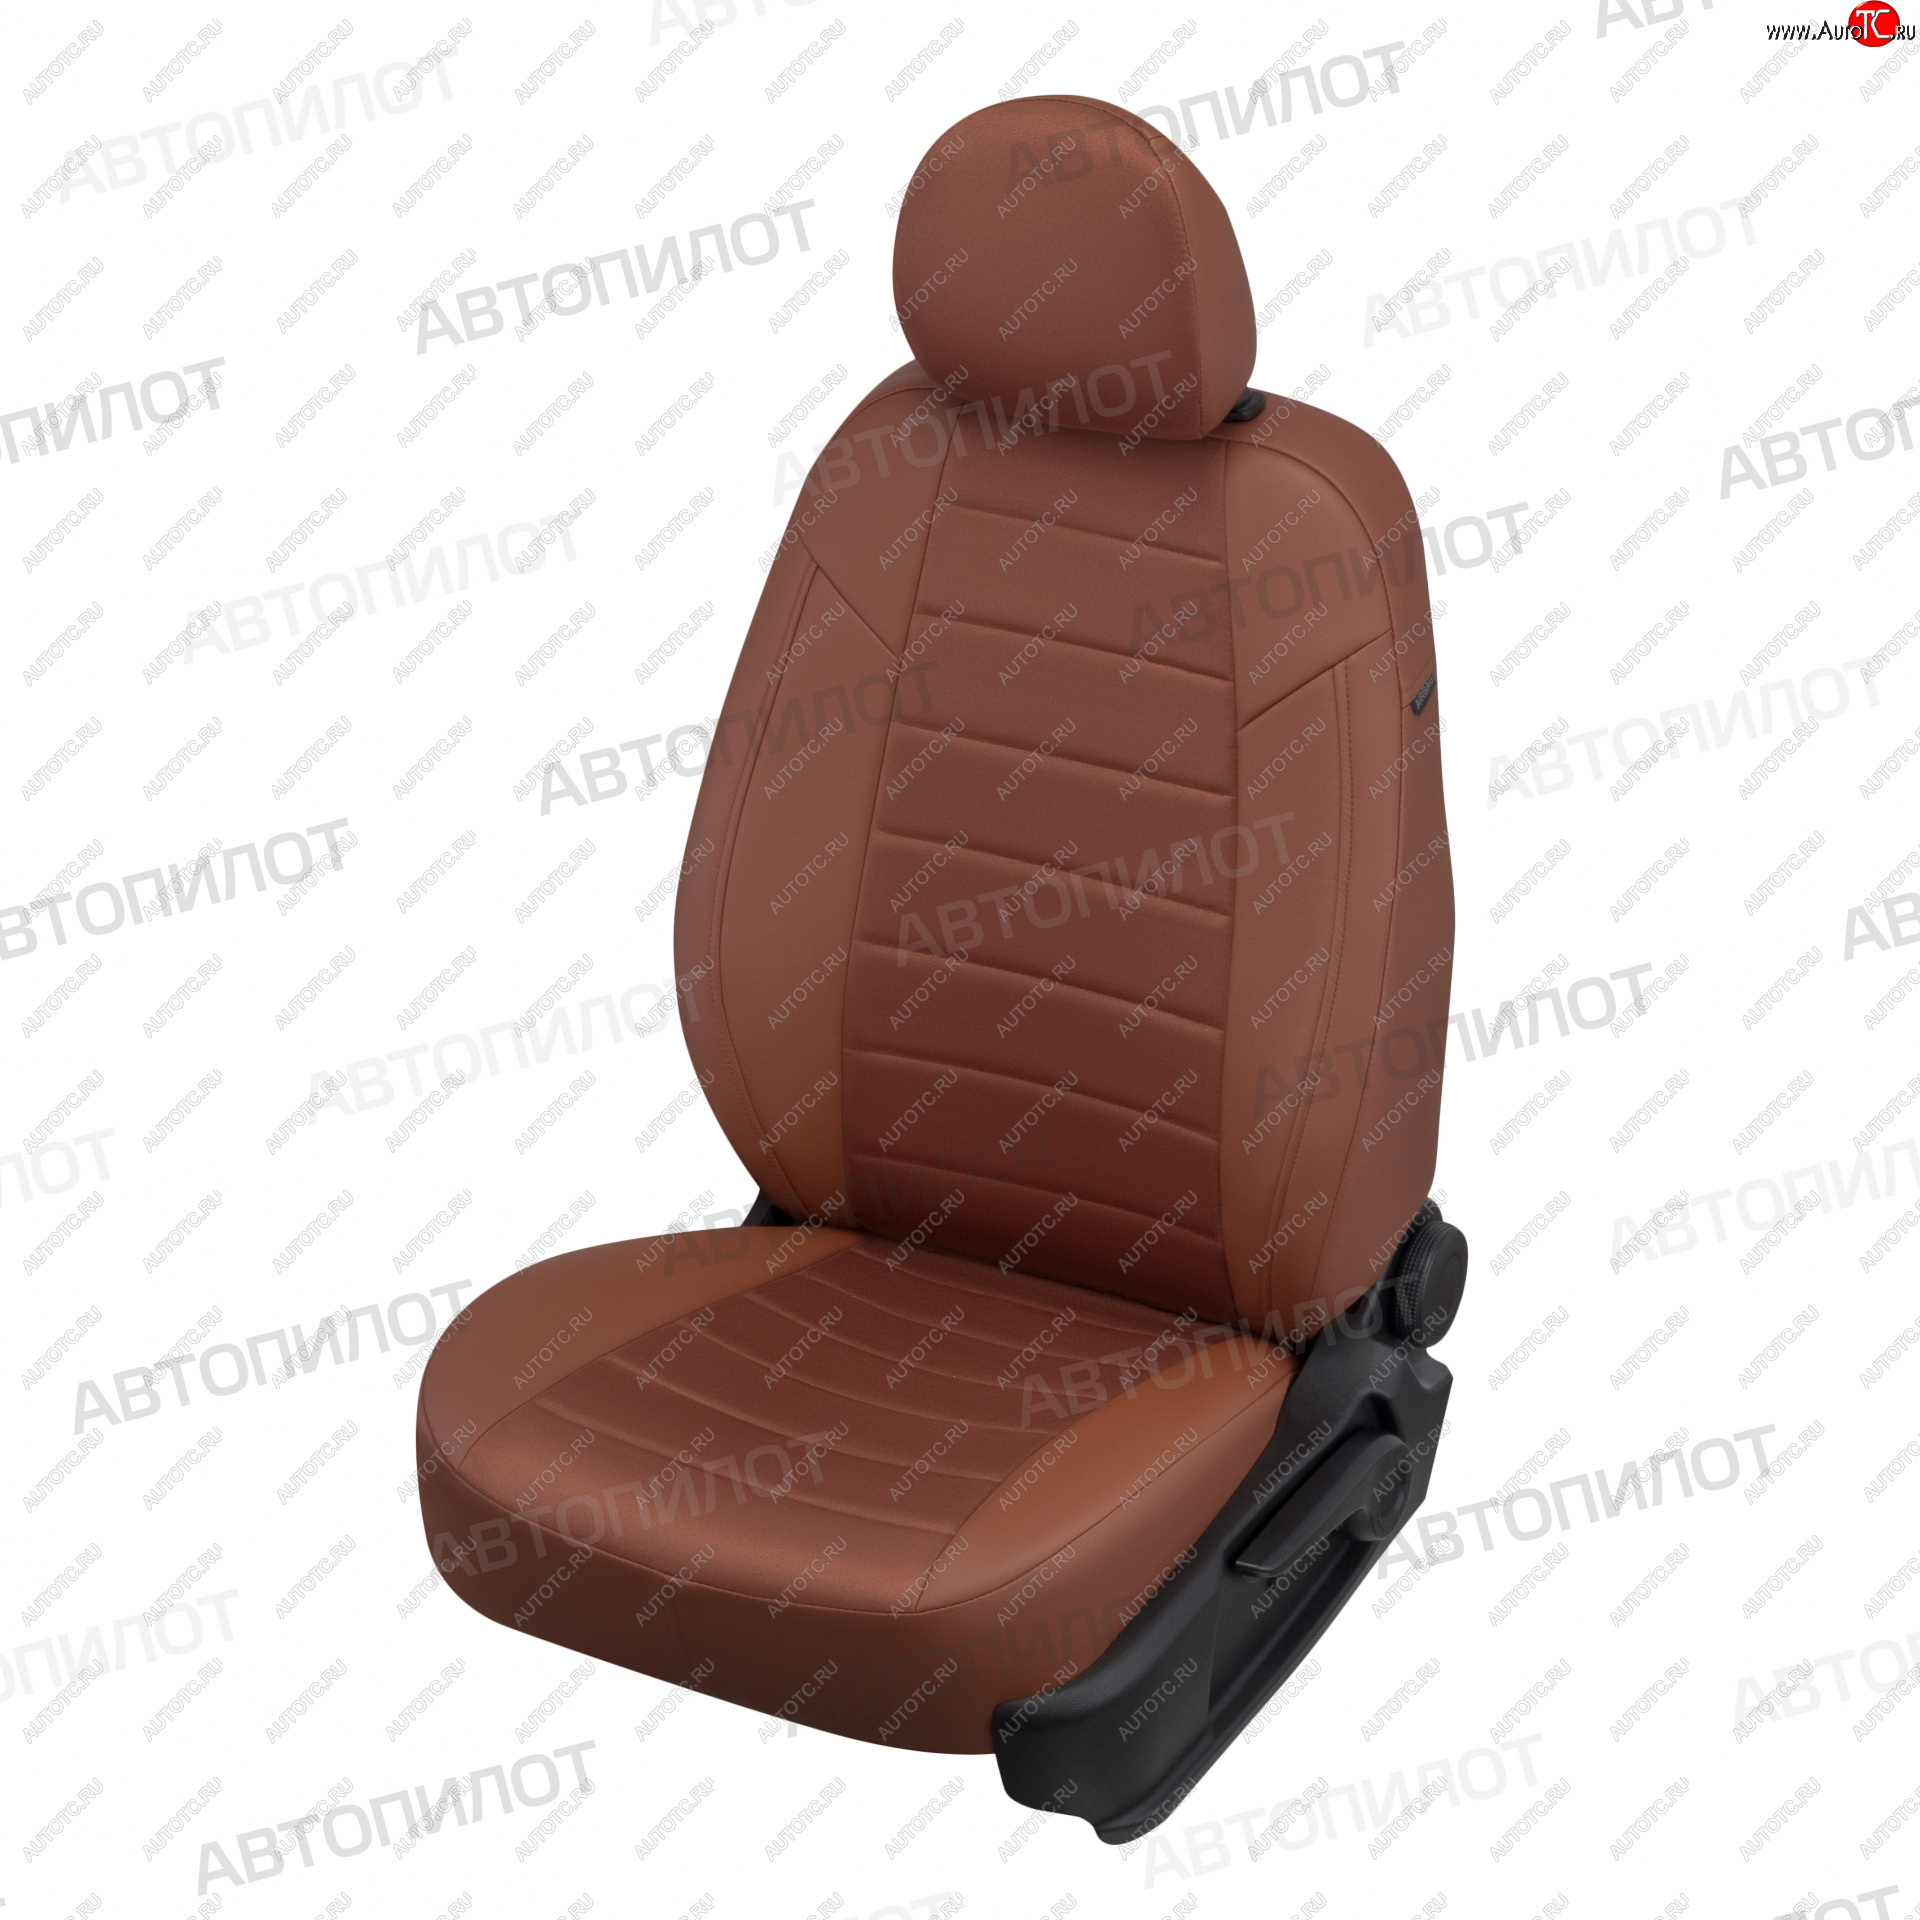 13 449 р. Чехлы сидений (экокожа/алькантара, Classic) Автопилот  KIA Cerato  3 YD (2013-2019) (коричневый)